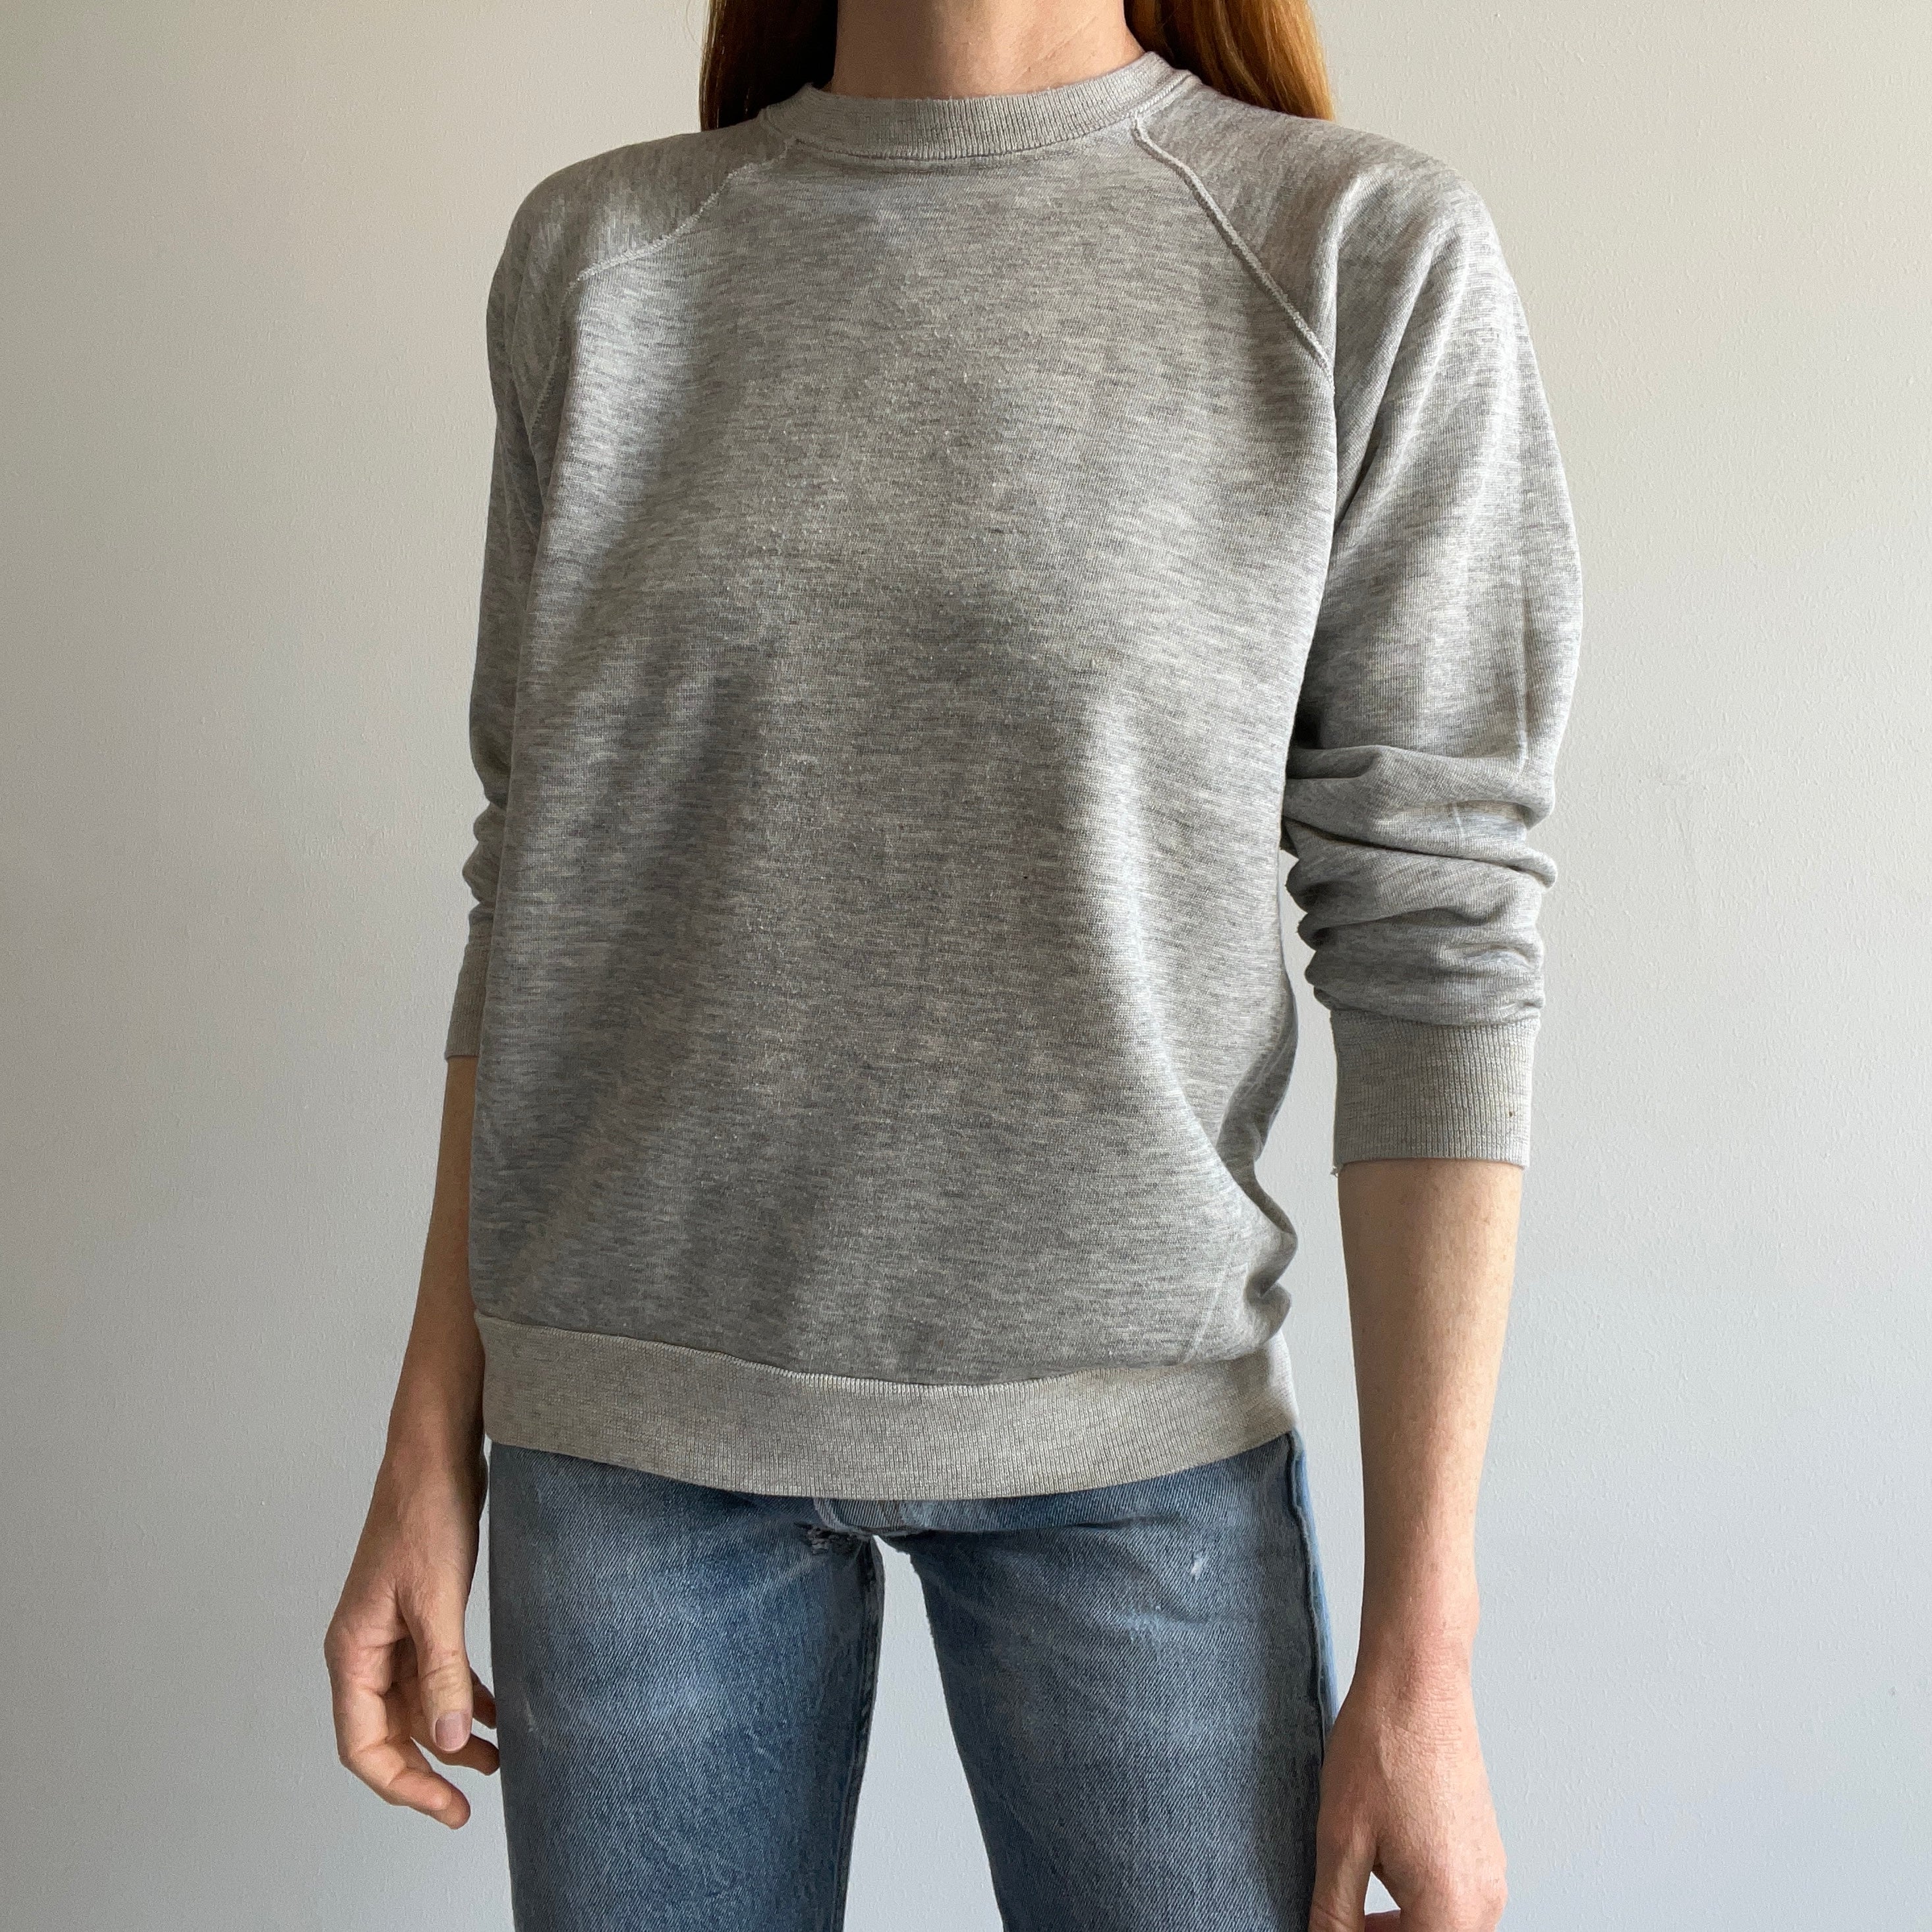 1980s Aged Blank Gray Raglan Sweatshirt by Chalk Line